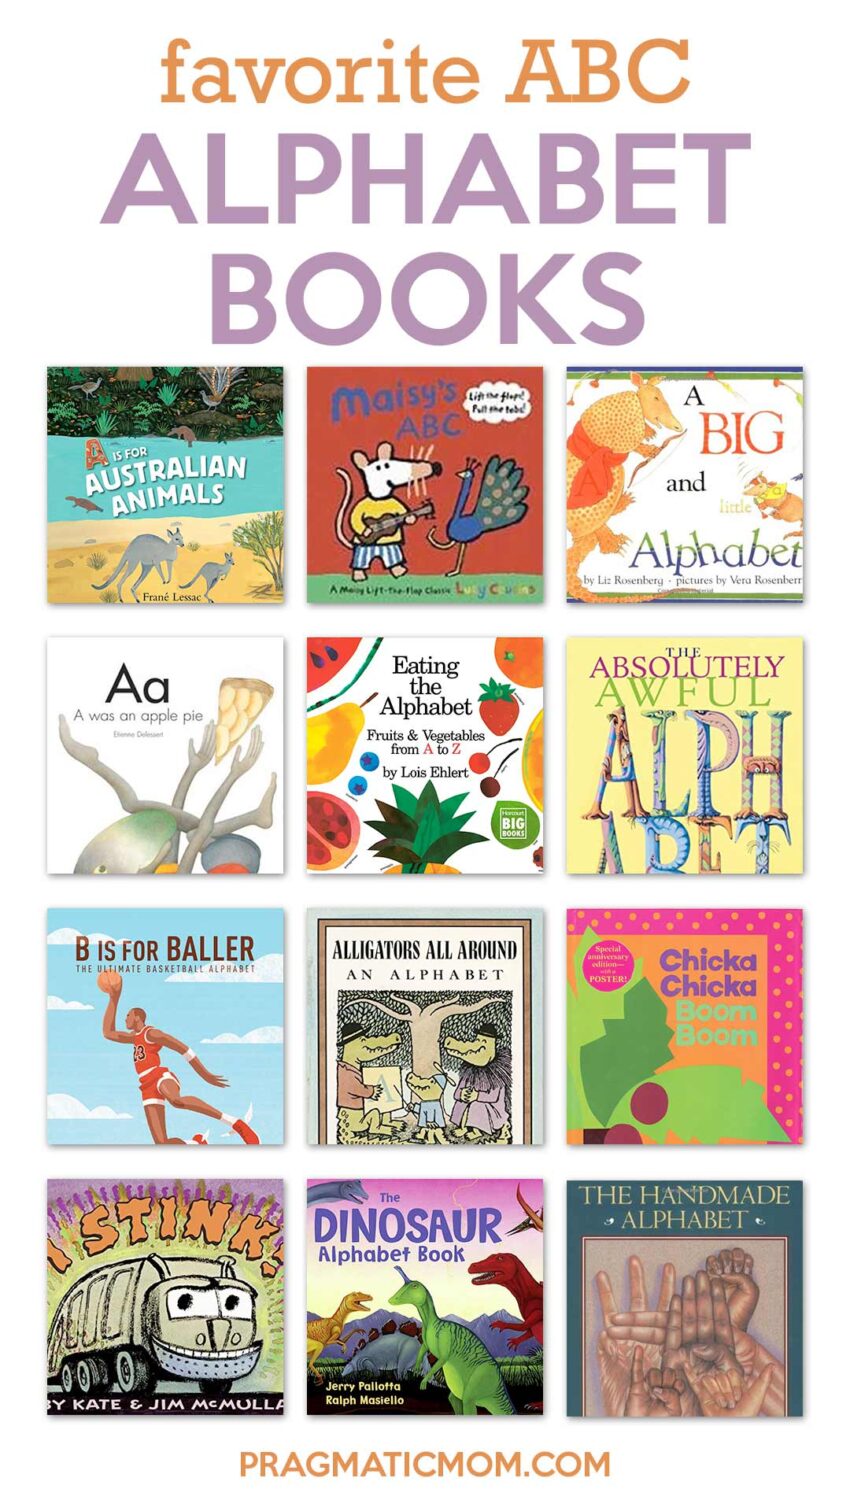 Our Favorite ABC Alphabet Books for Kids